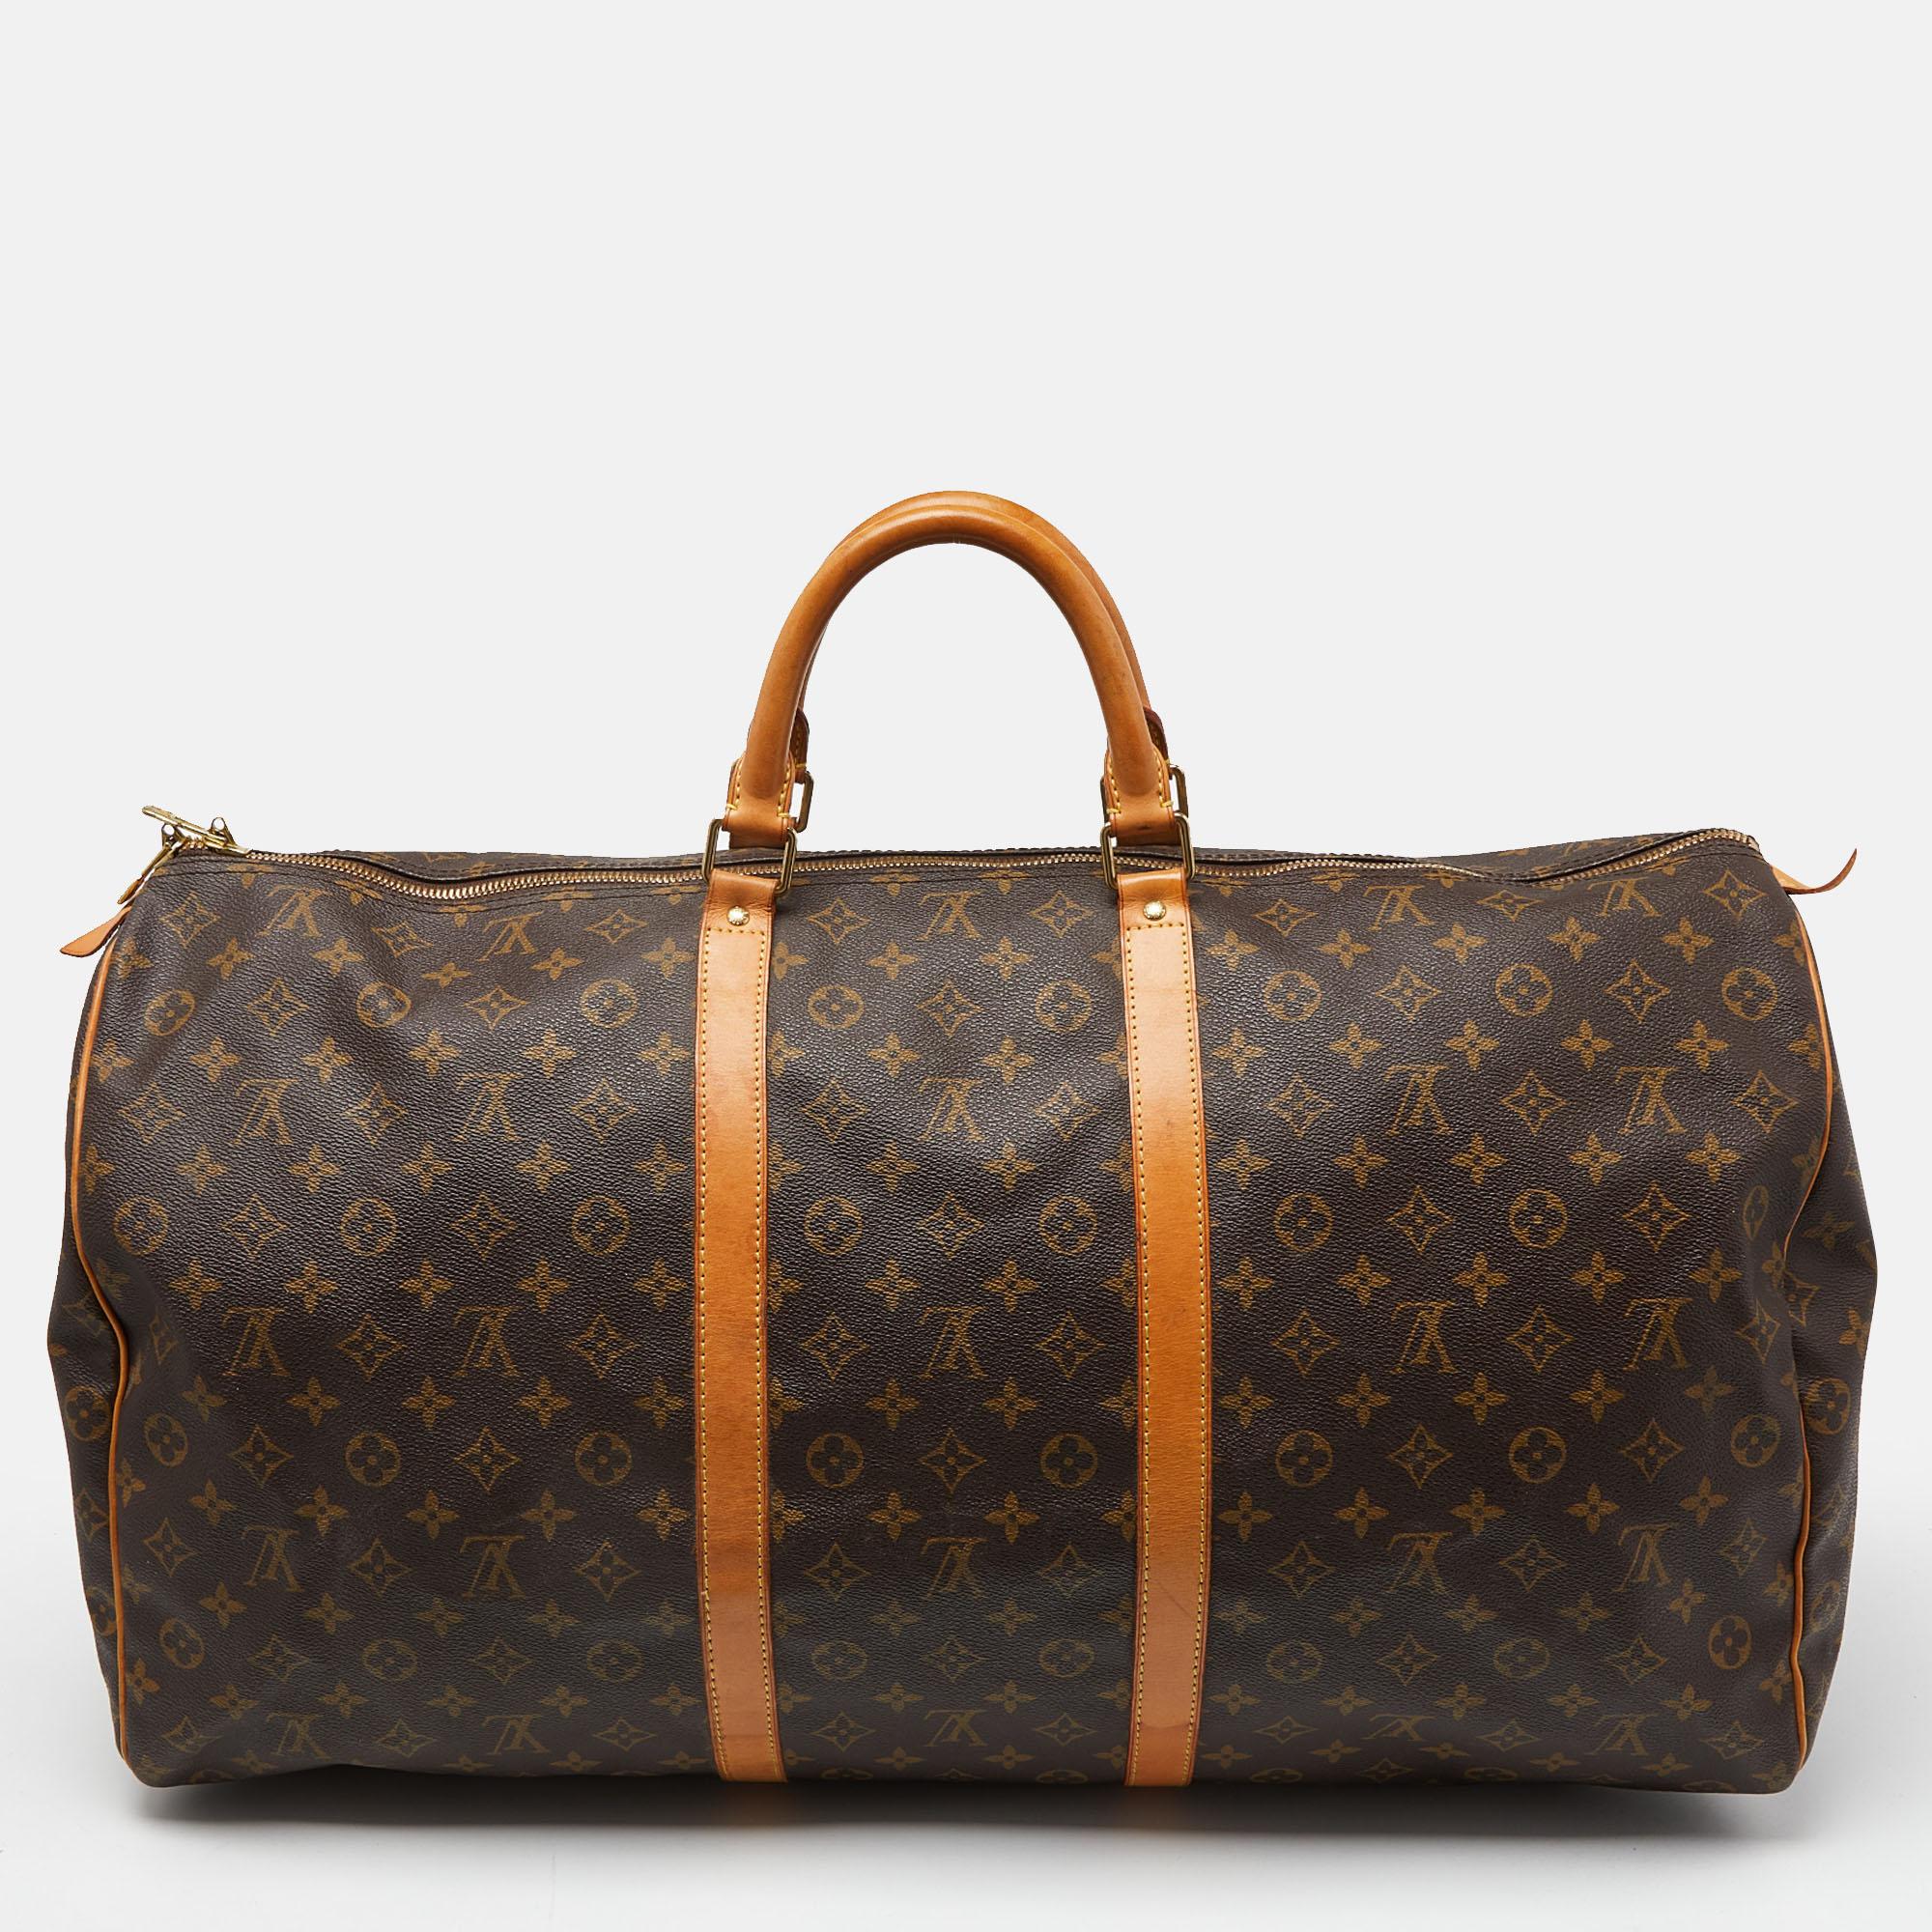 Louis Vuitton Monogram Canvas Keepall Bandouliere 60 Bag In Good Condition For Sale In Dubai, Al Qouz 2